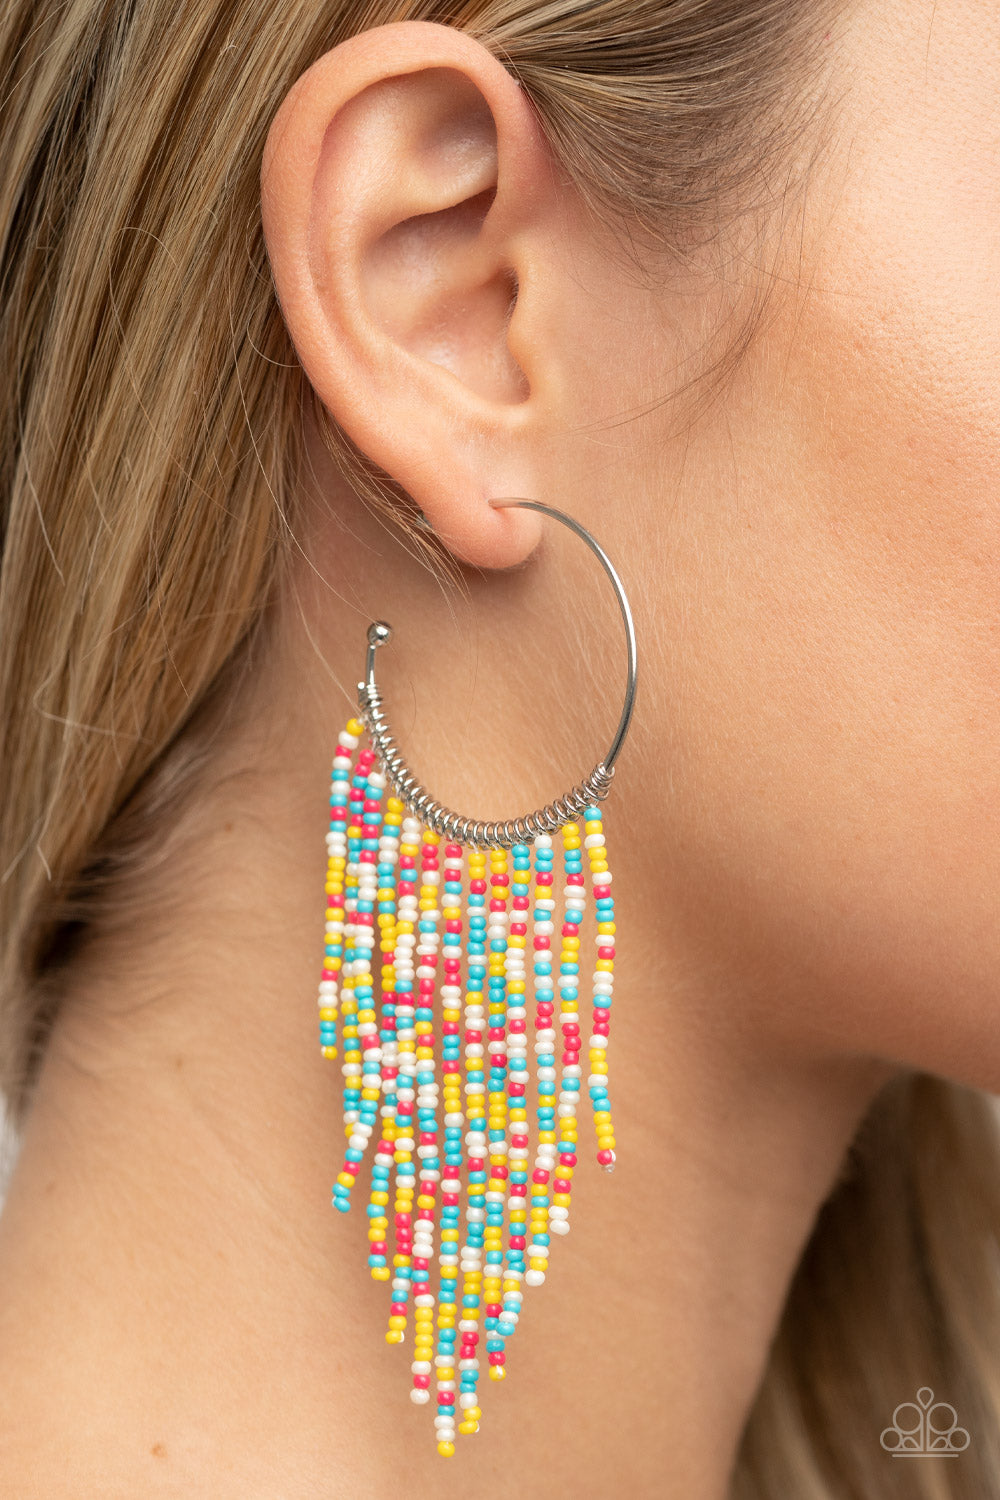 Saguaro Breeze - Multi (Pink, Yellow, Blue & White) Seed Bead Hoop Earrings - Princess Glam Shop